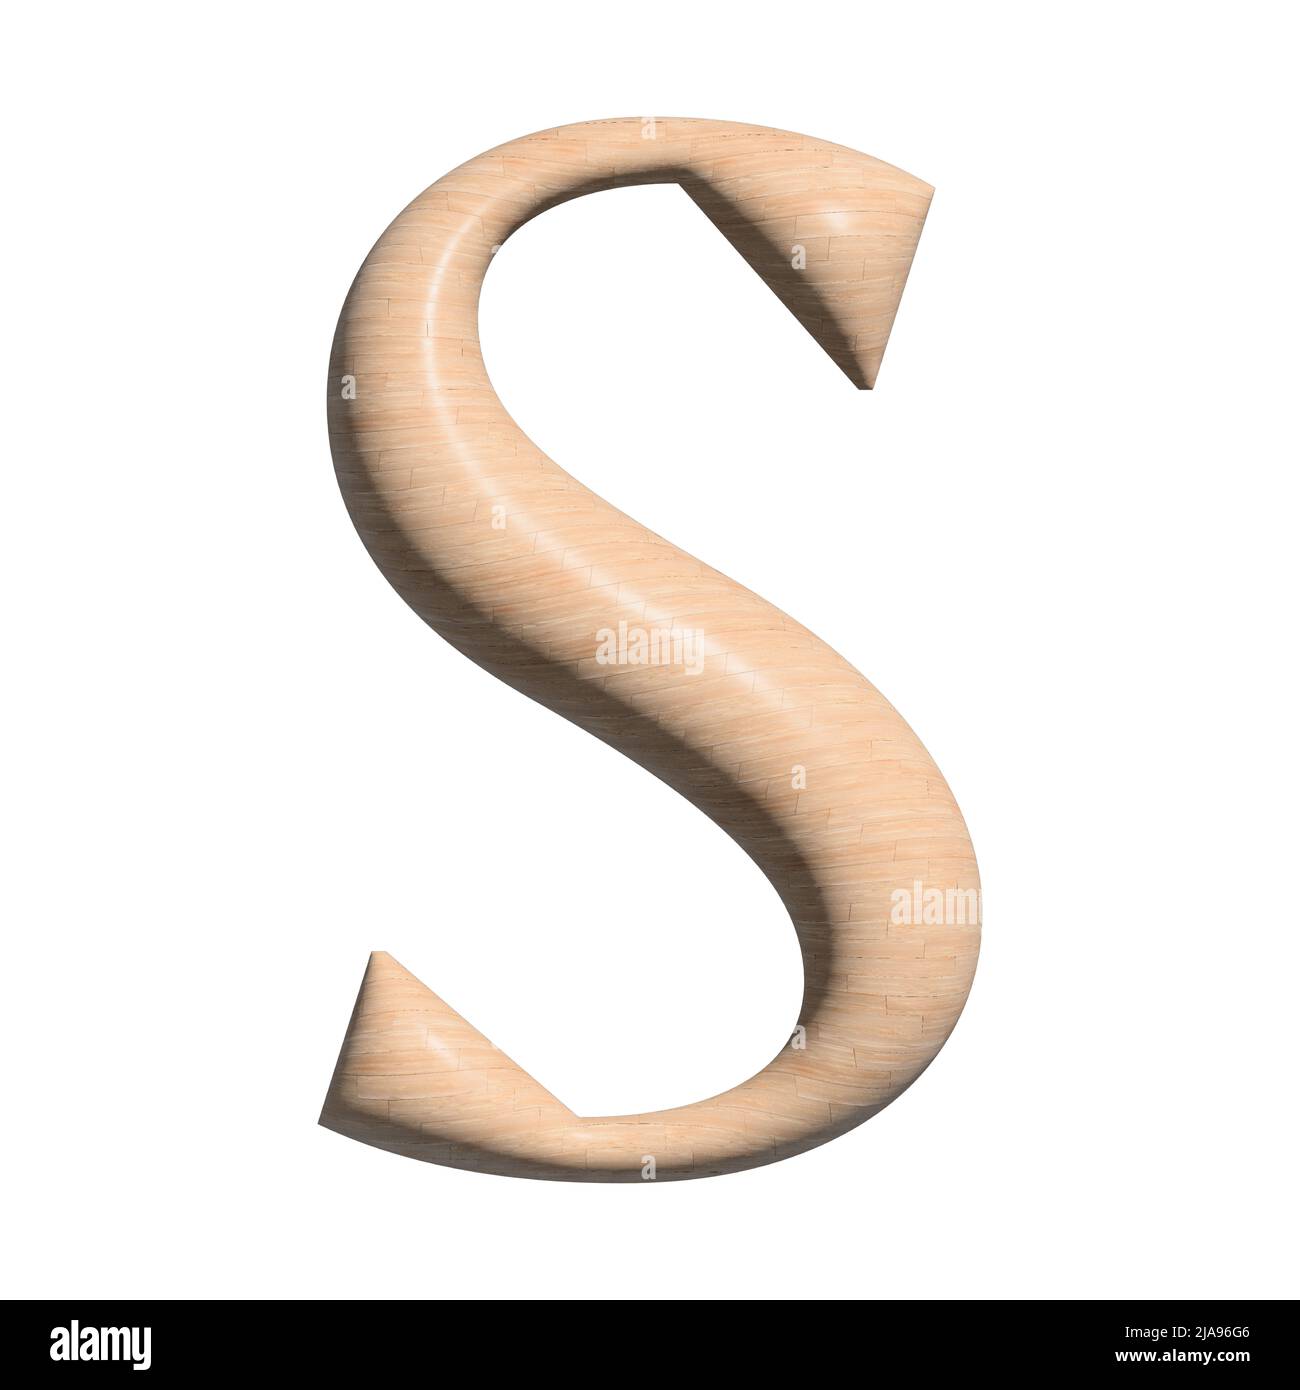 3D Wood capital S letter illustration on white background Stock Photo